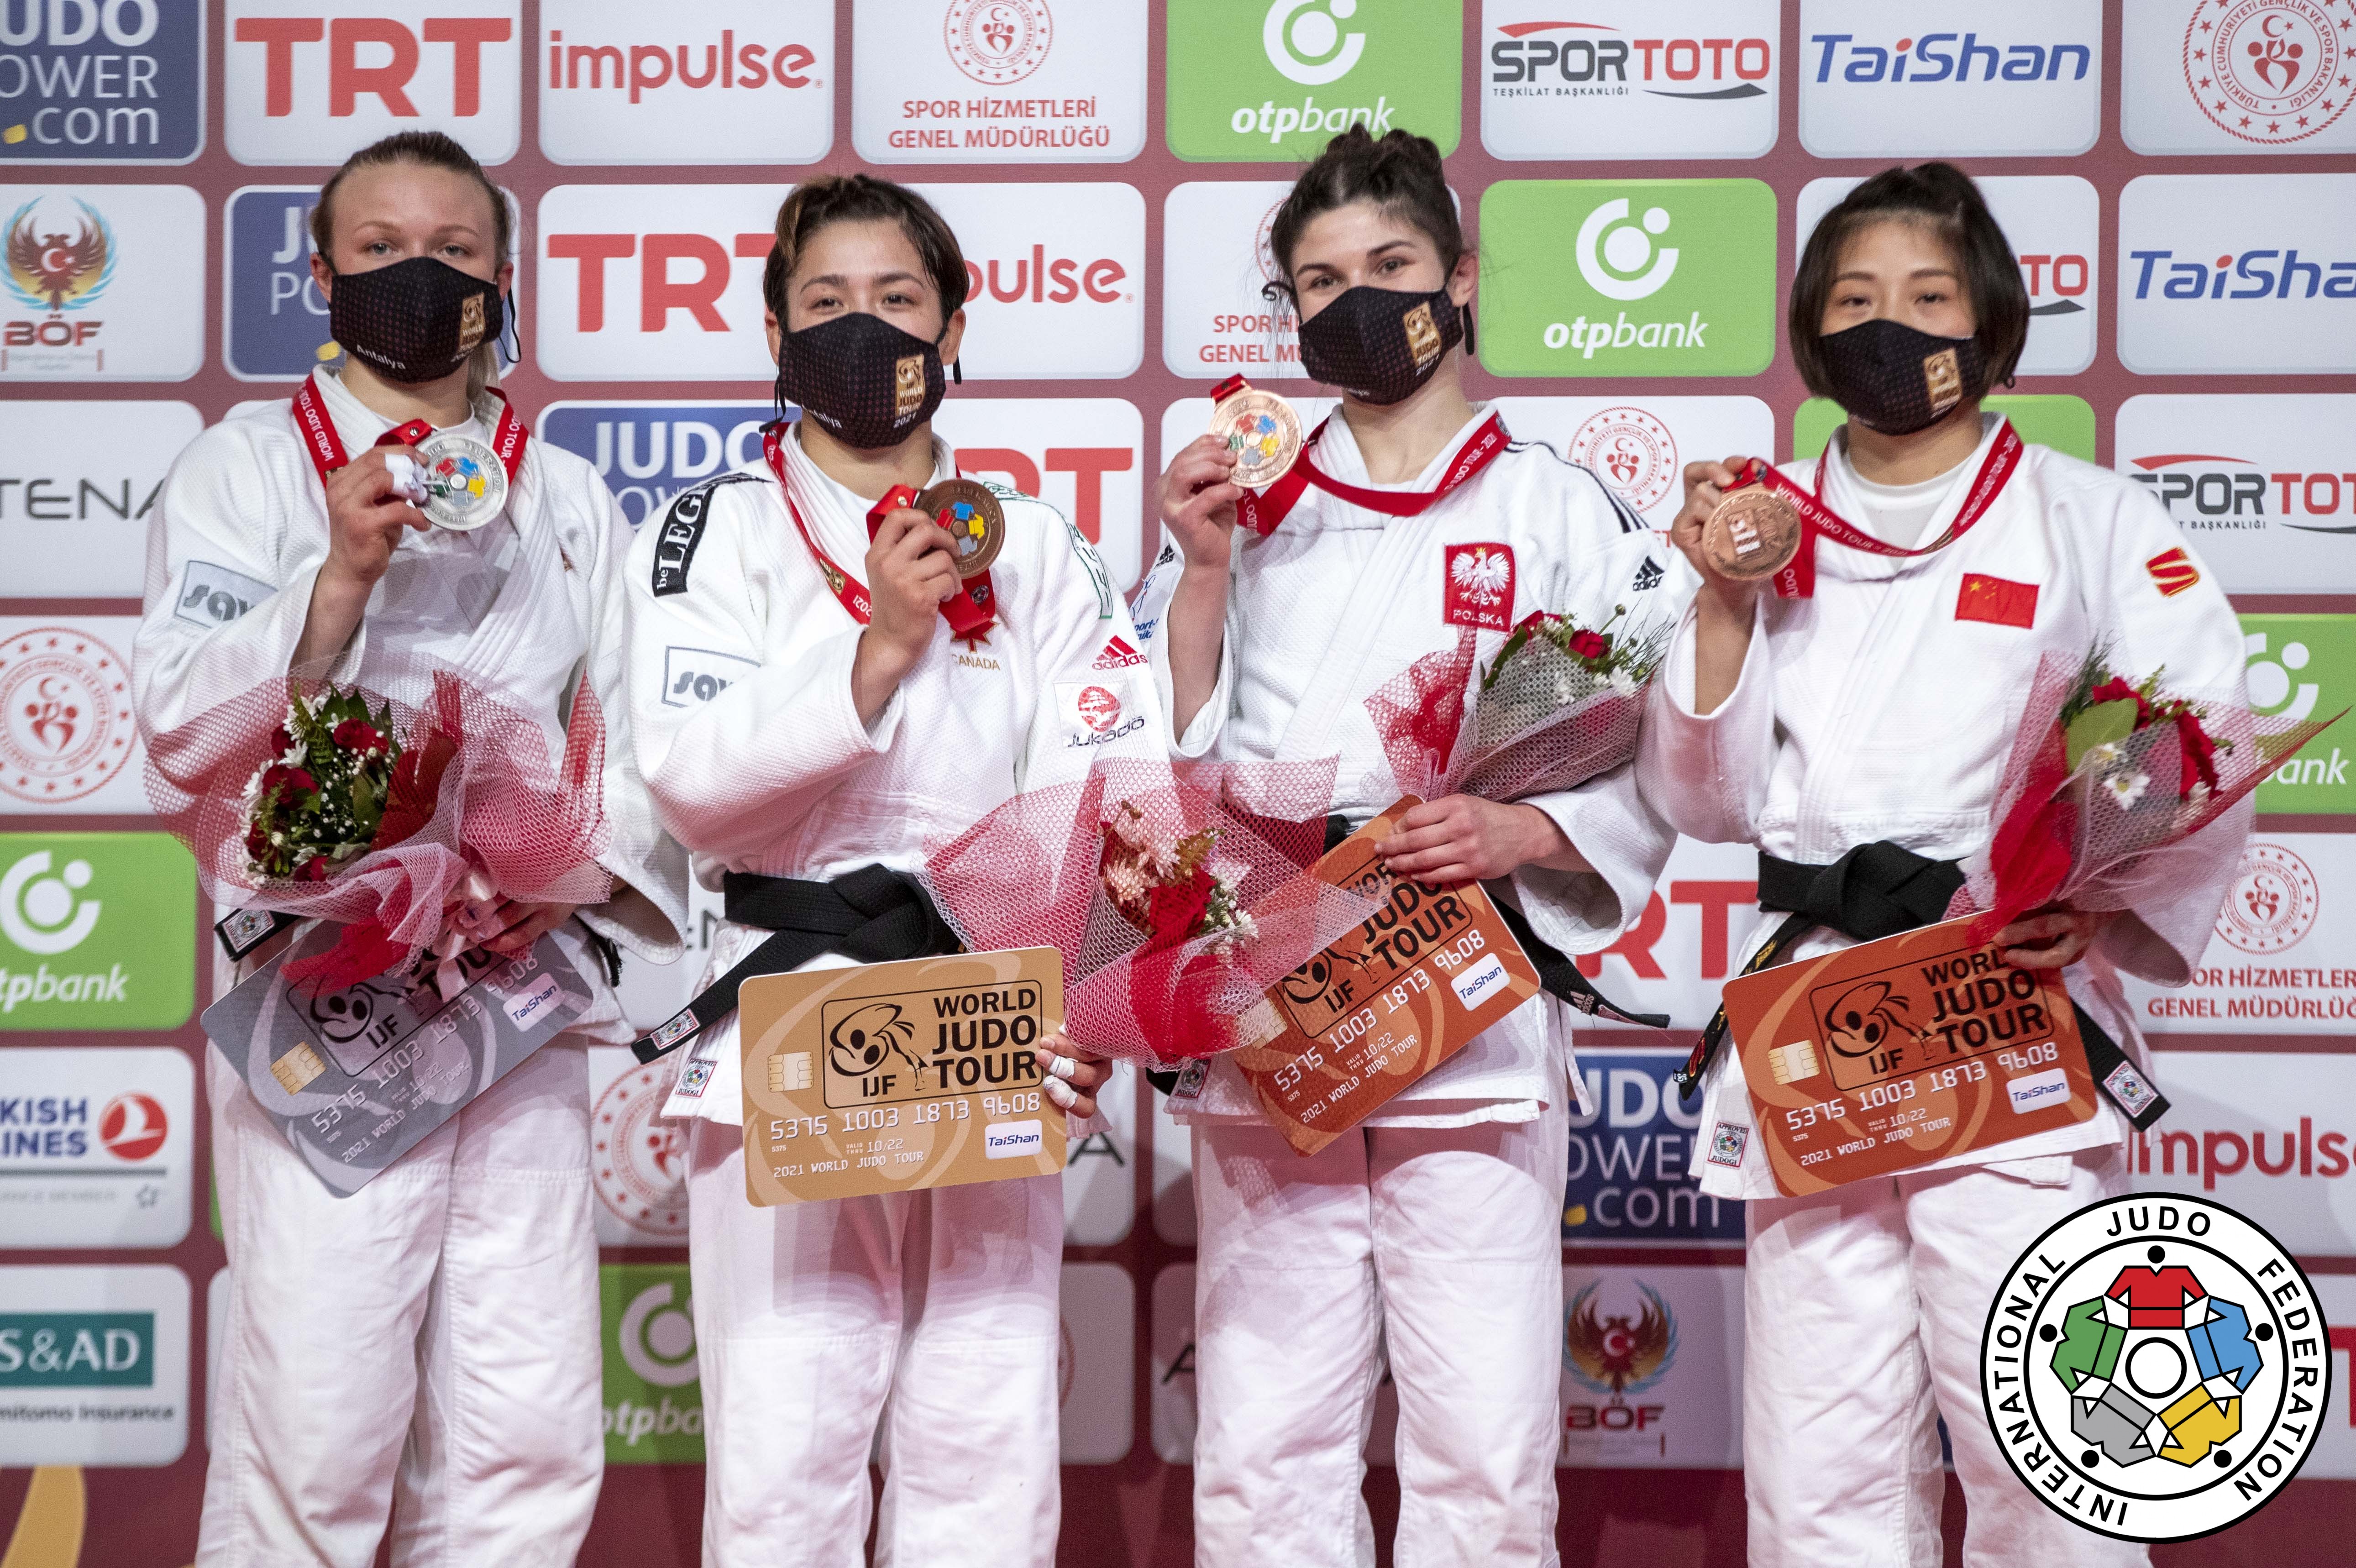 Four female judokas on podium